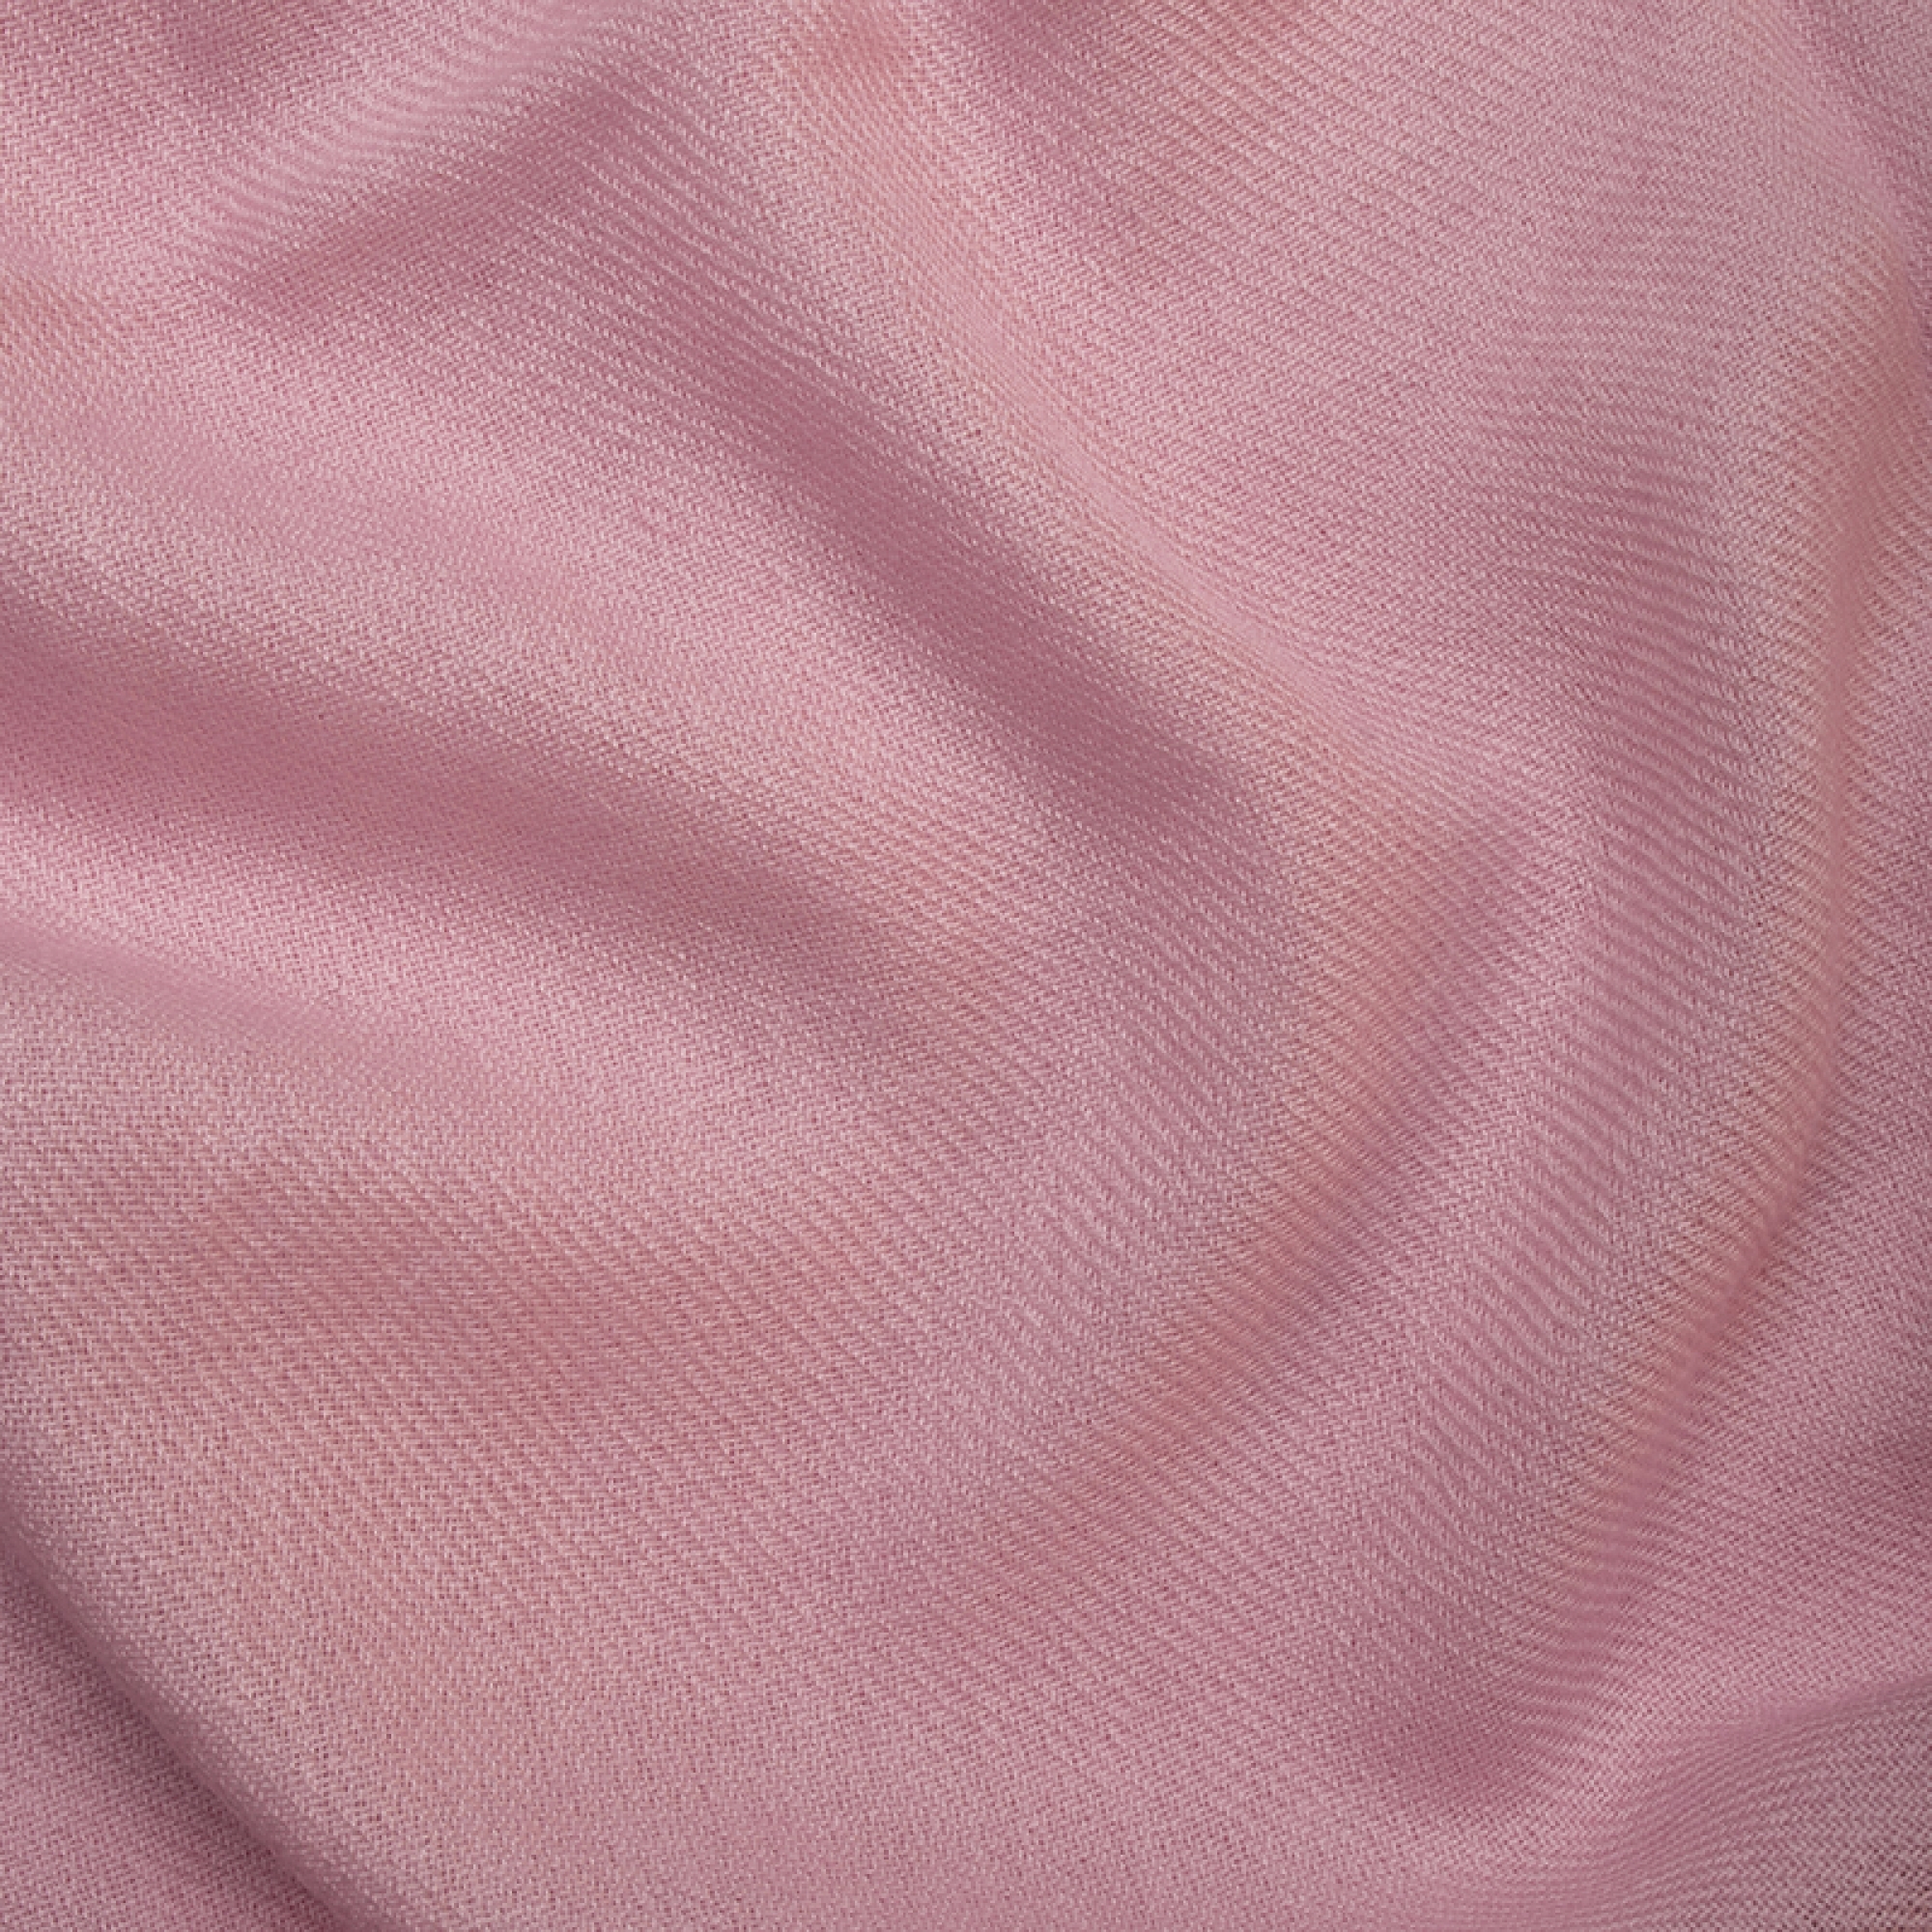 Cashmere uomo toodoo plain l 220 x 220 rosa pallido 220x220cm